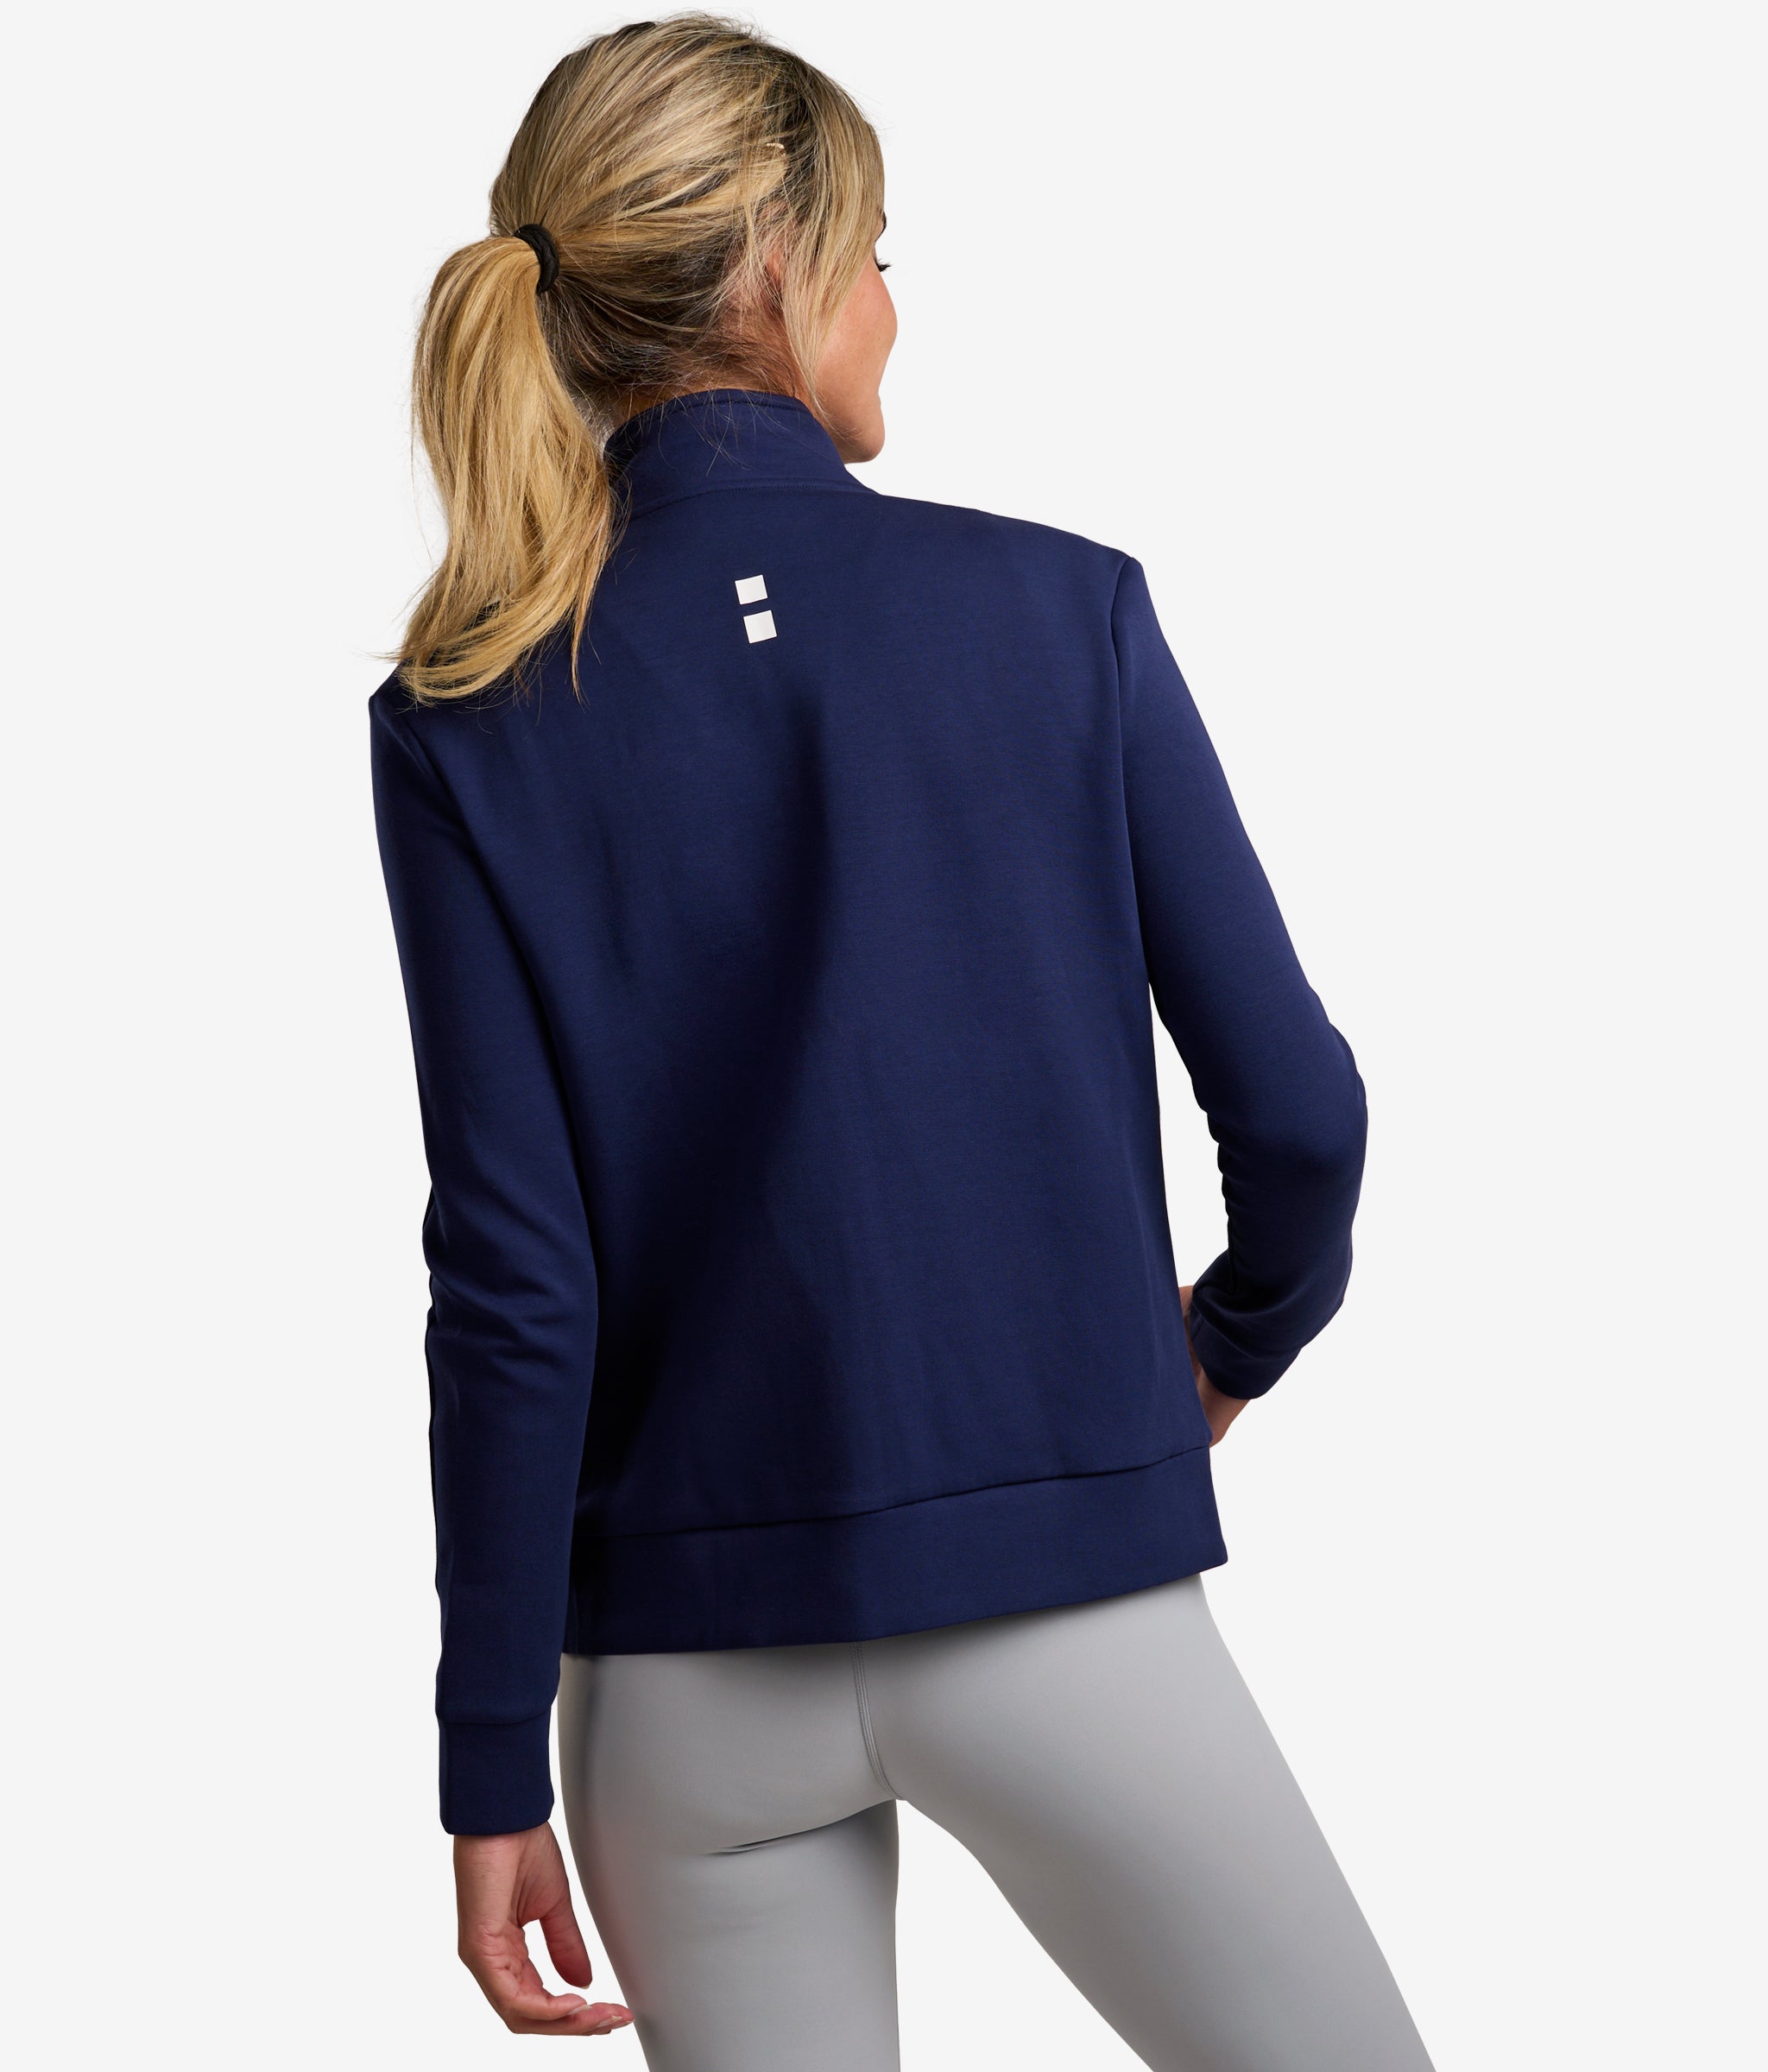 nordicdots tennis jacket in beautiful navy blue color